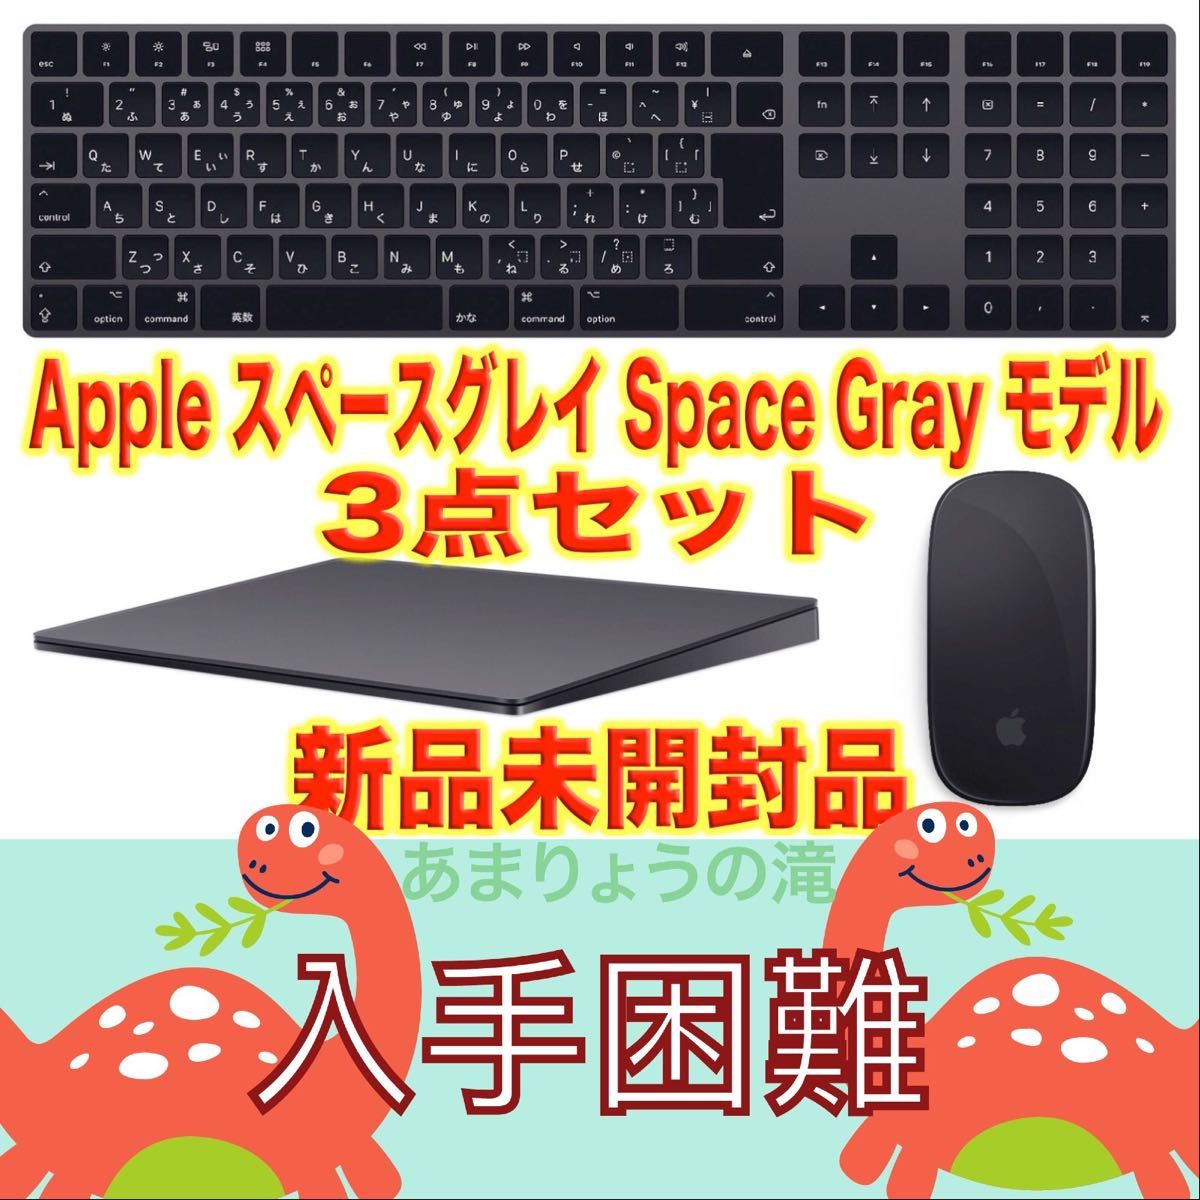 Apple Space Gray モデル Magic 3点セット-Mouse-Trackpad-Keyboard スペースグレイ